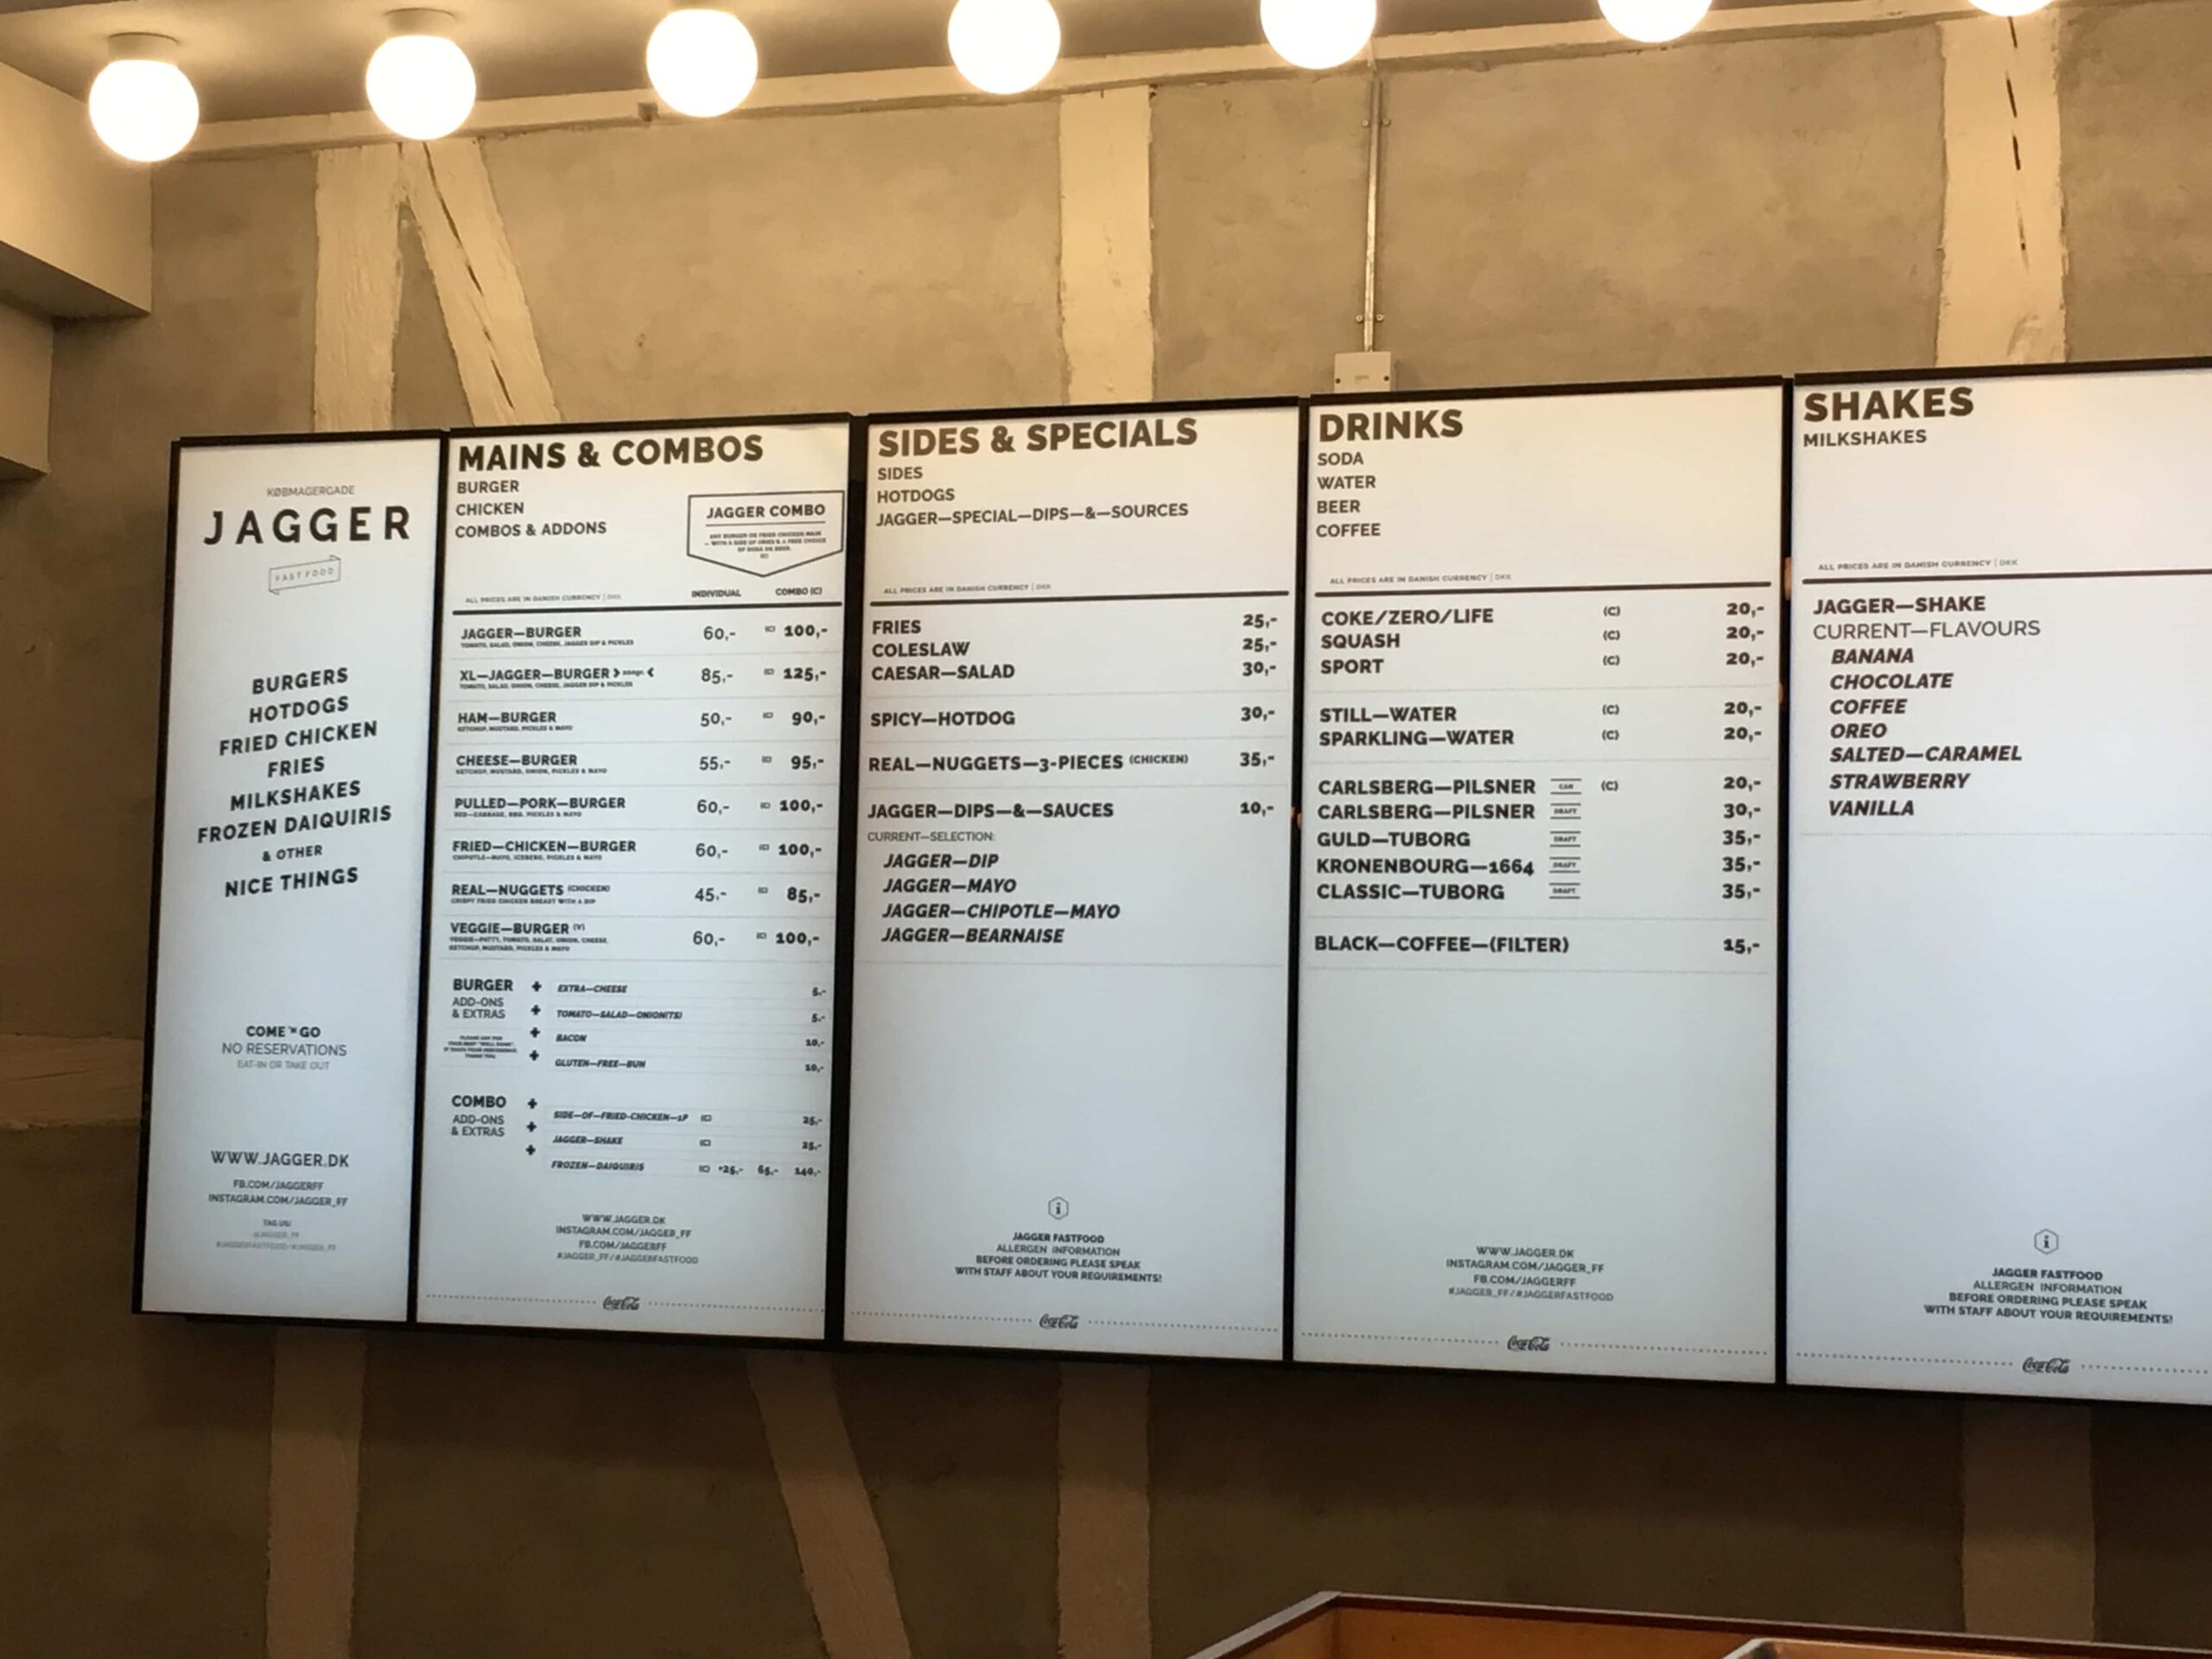 Jagger fast food menu in cph city 2018